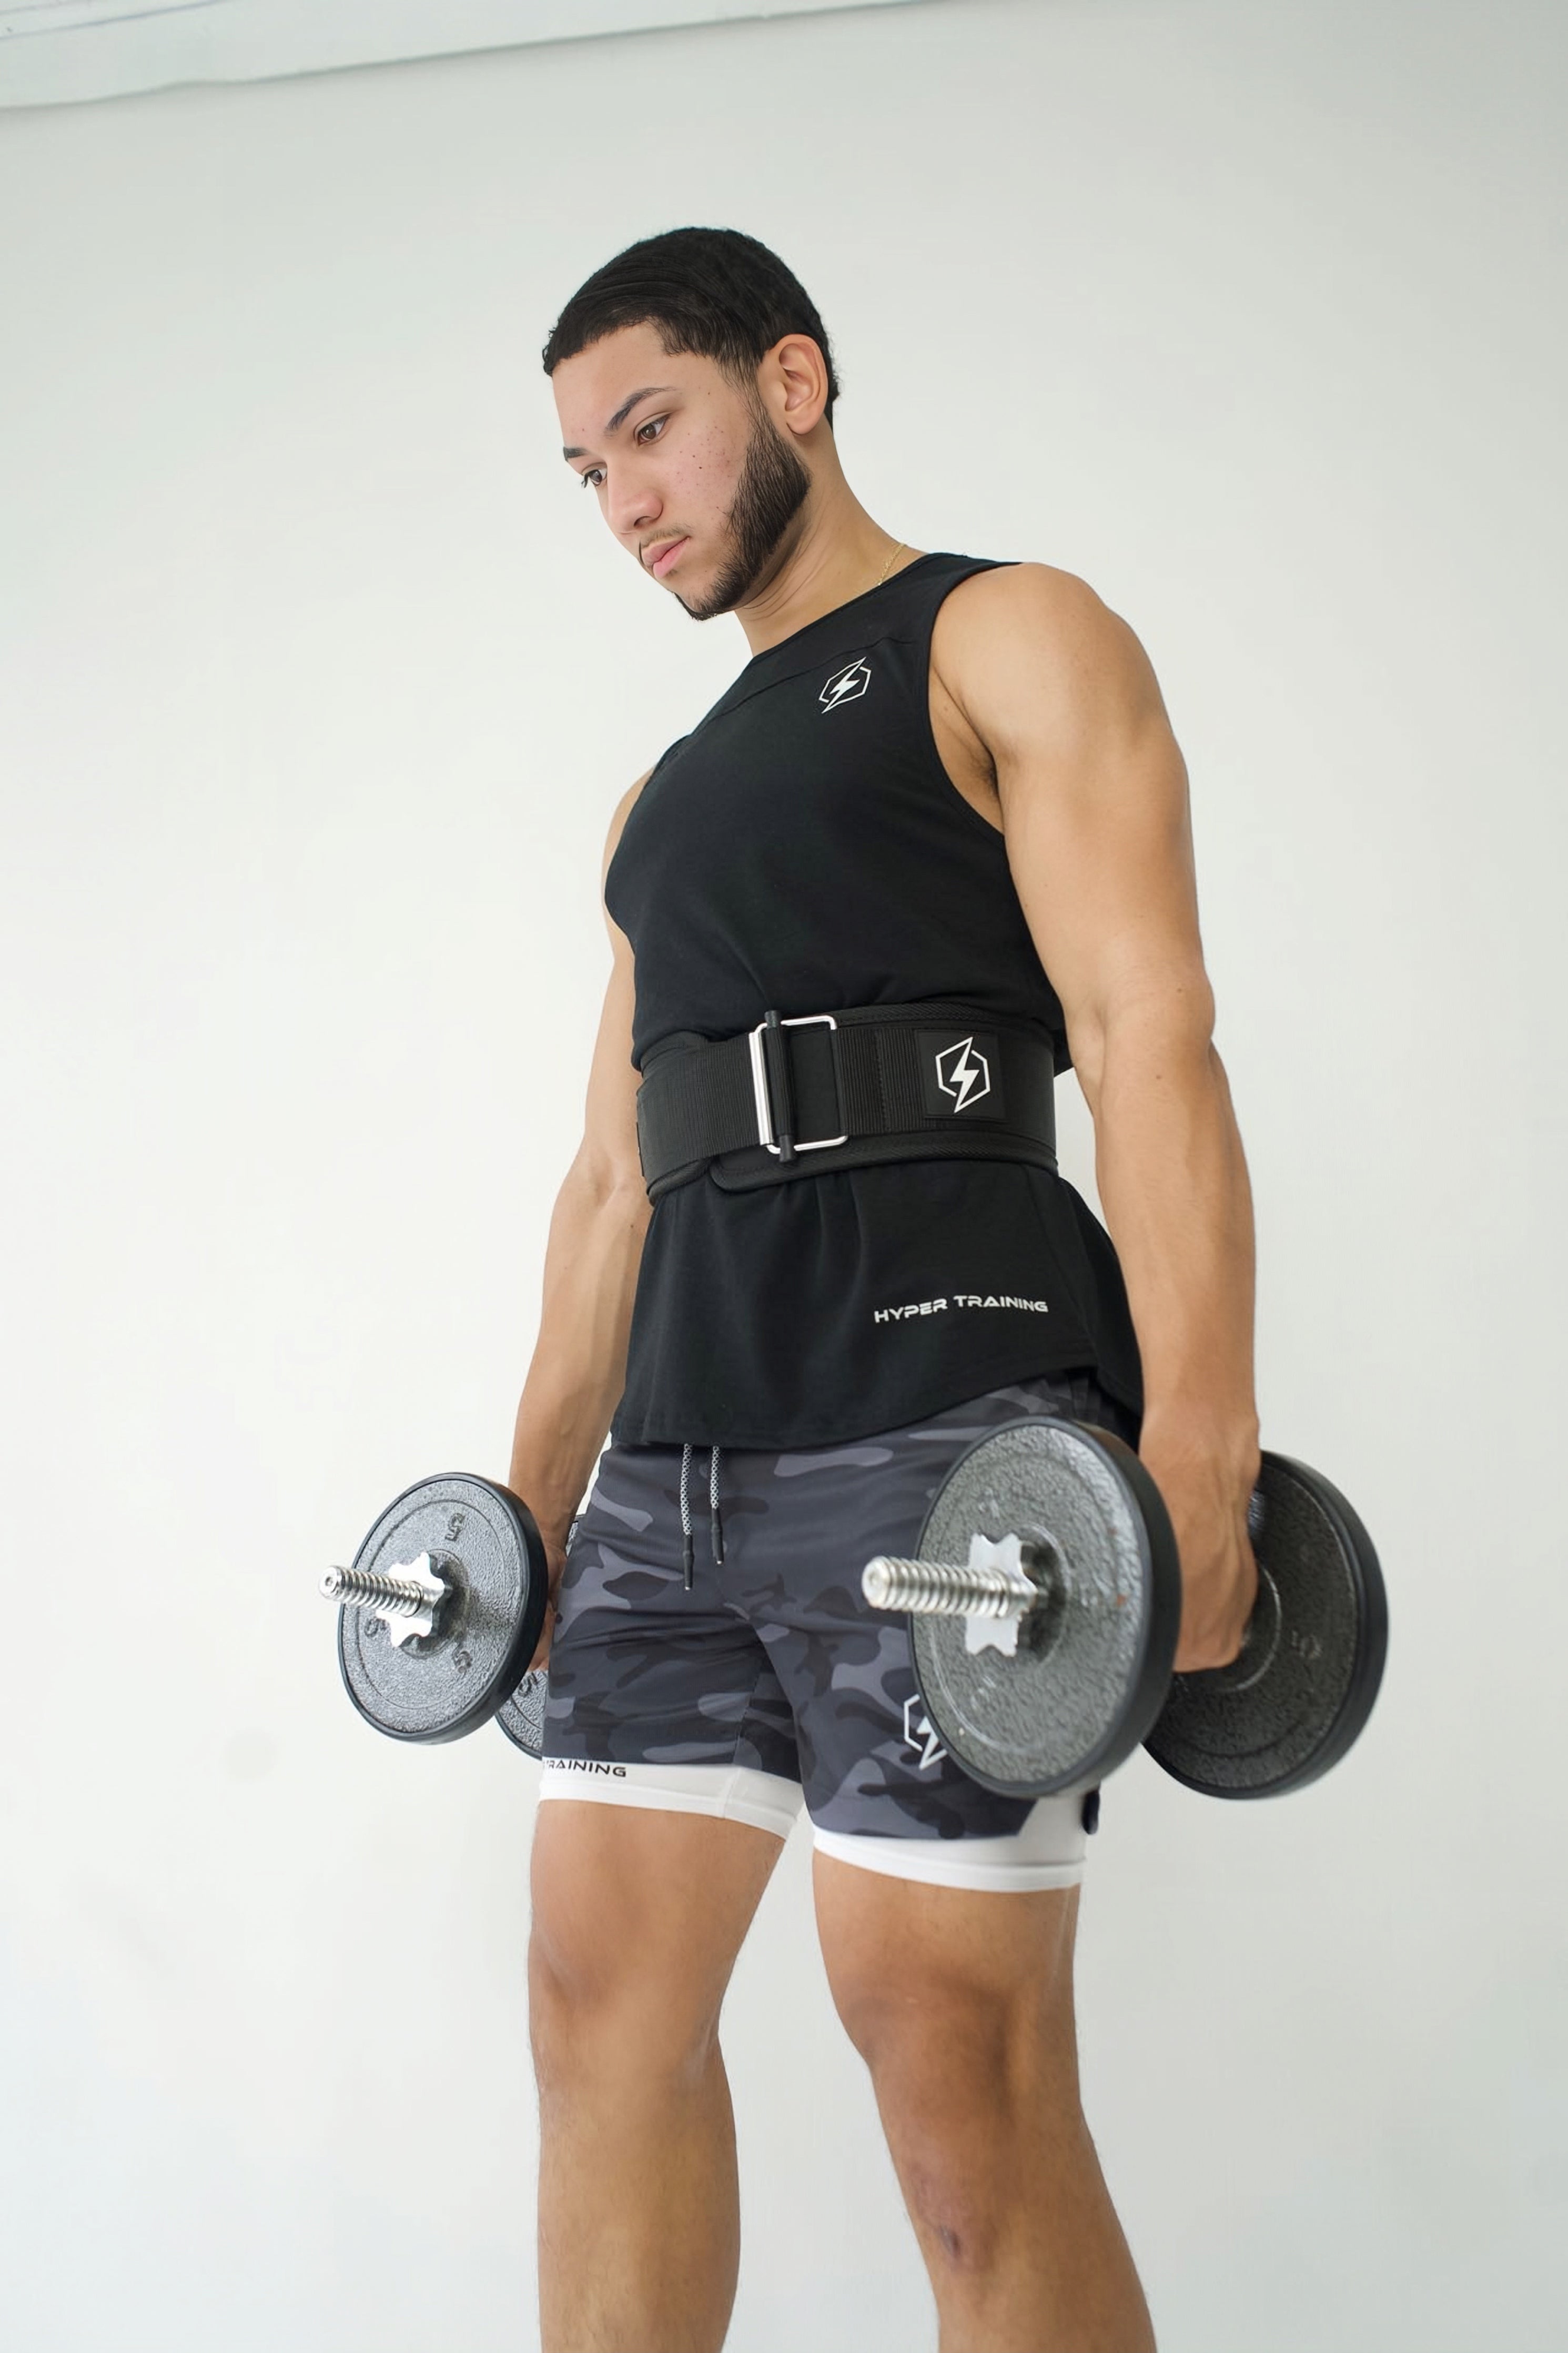 KALOAD Nylon Gym Fitness Adjustable Weightlifting Belt Waist